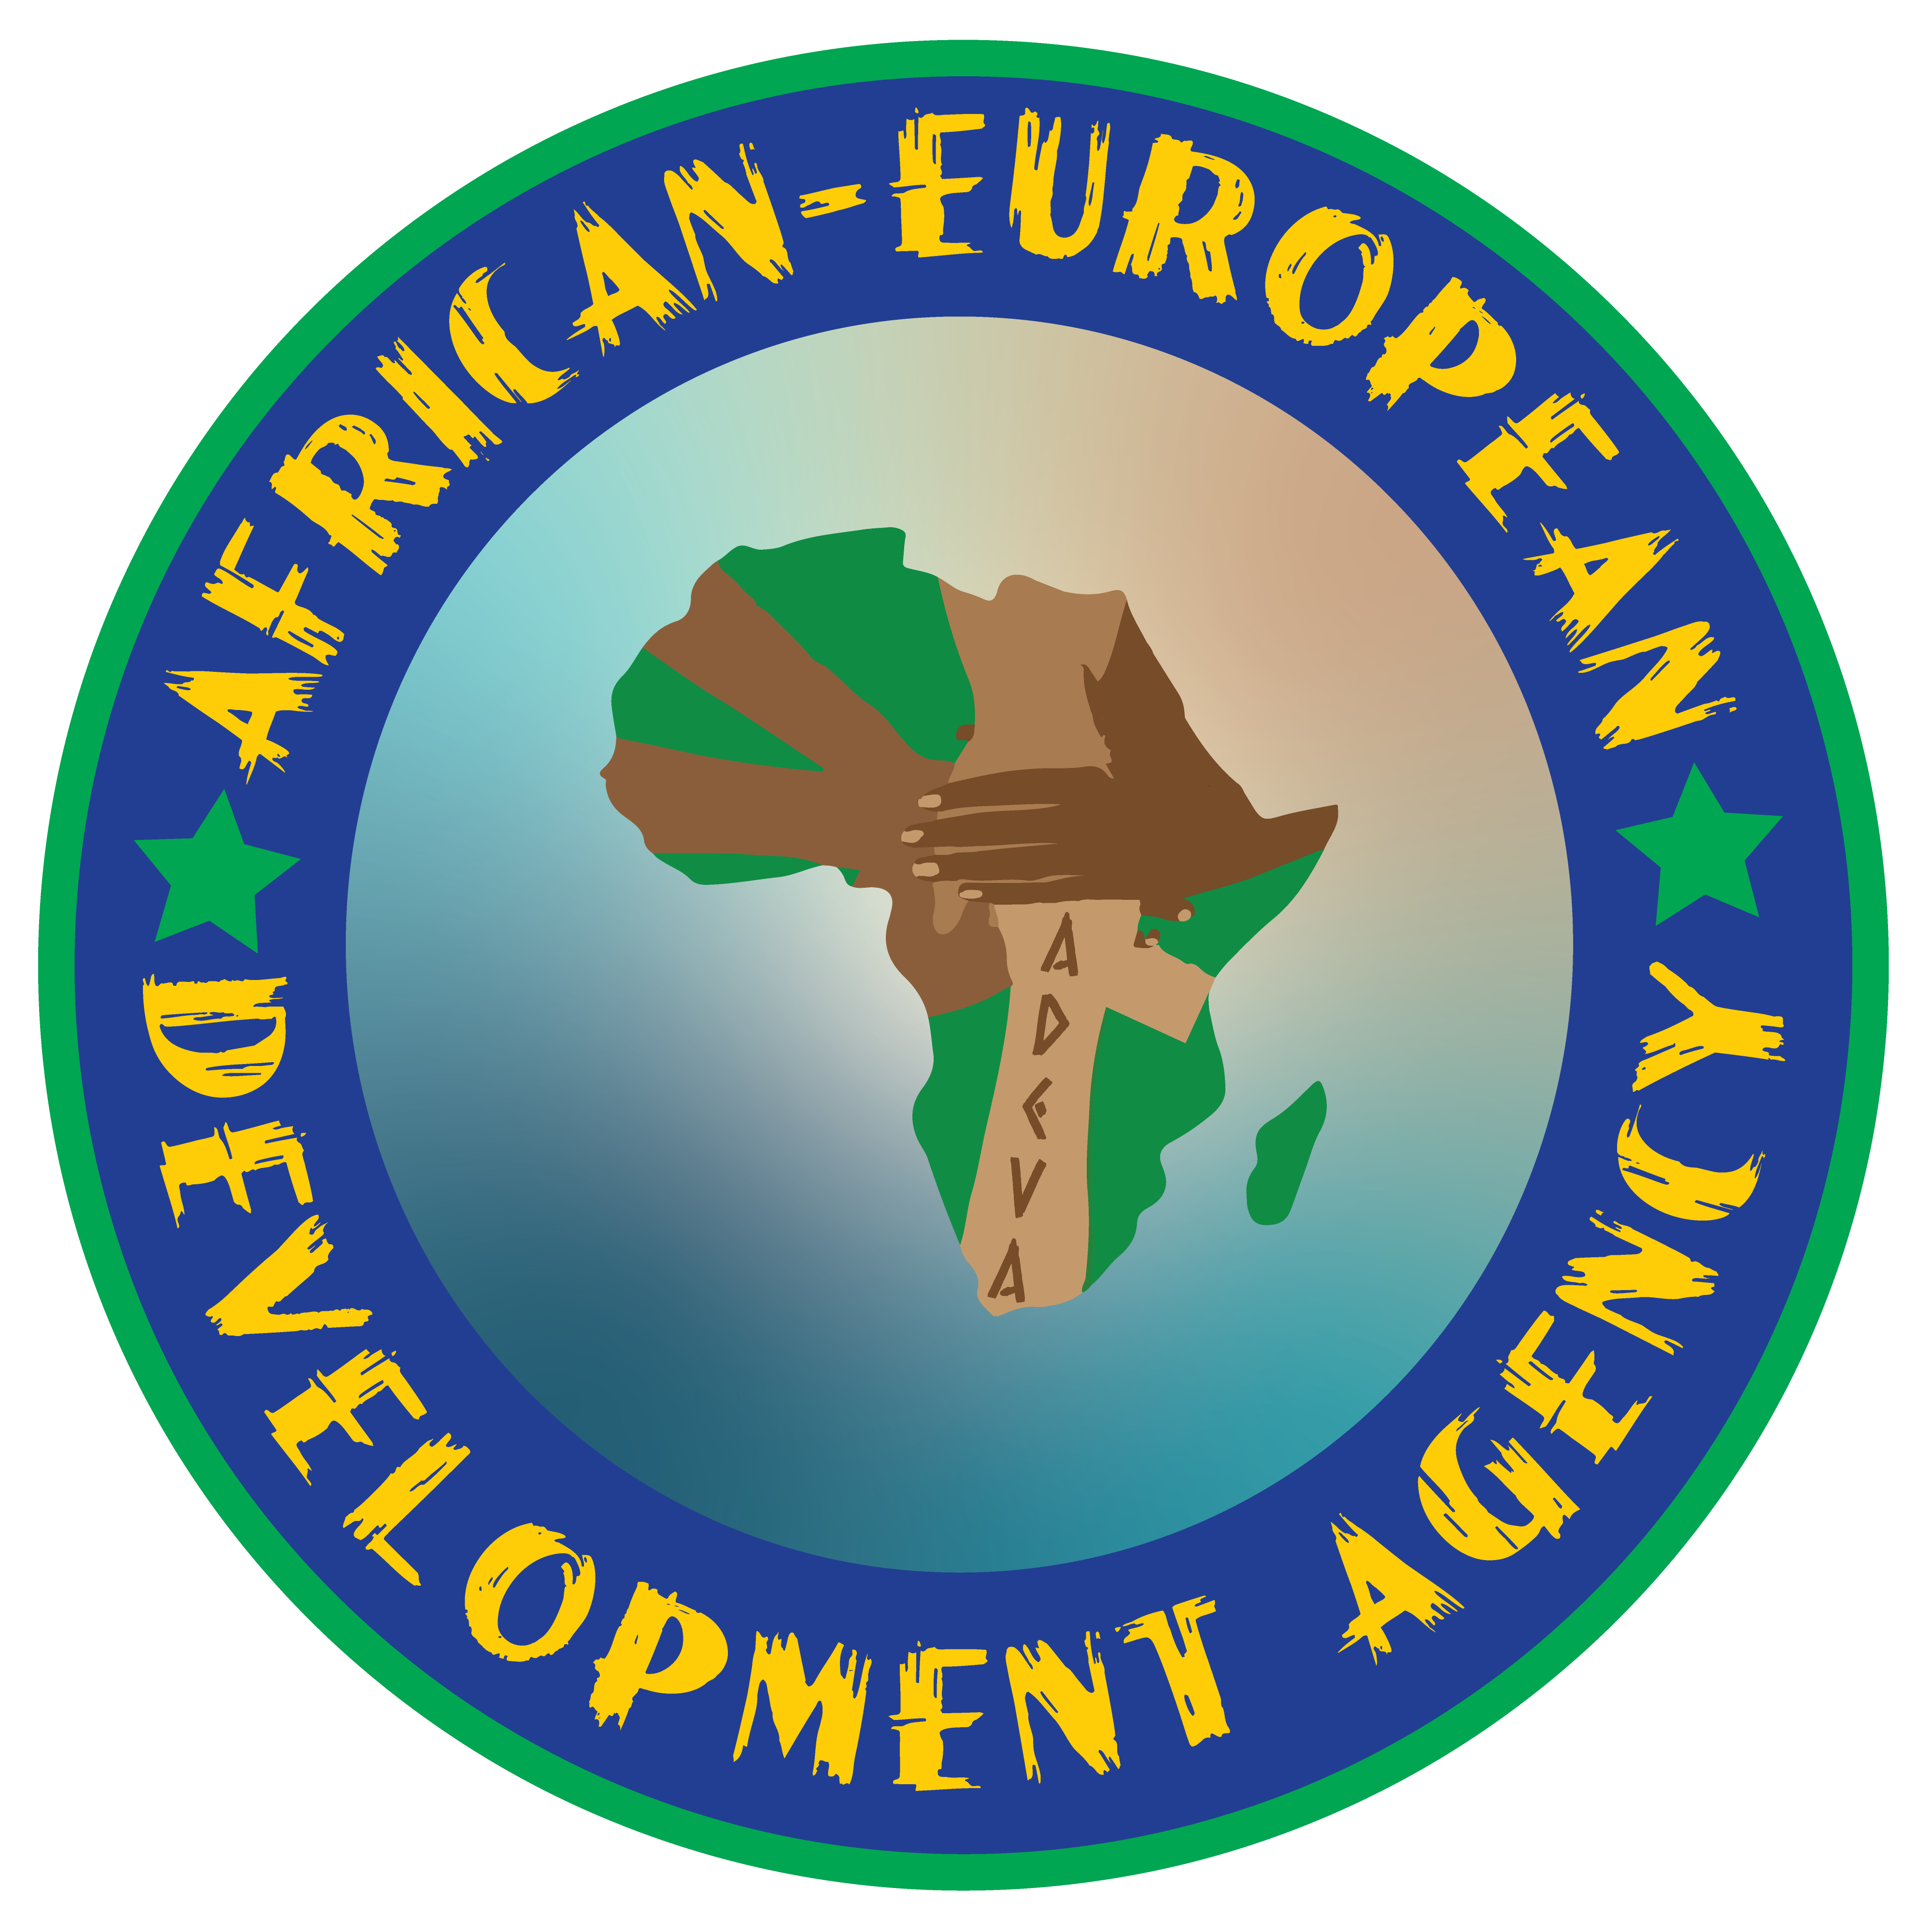 African-European Development Agency